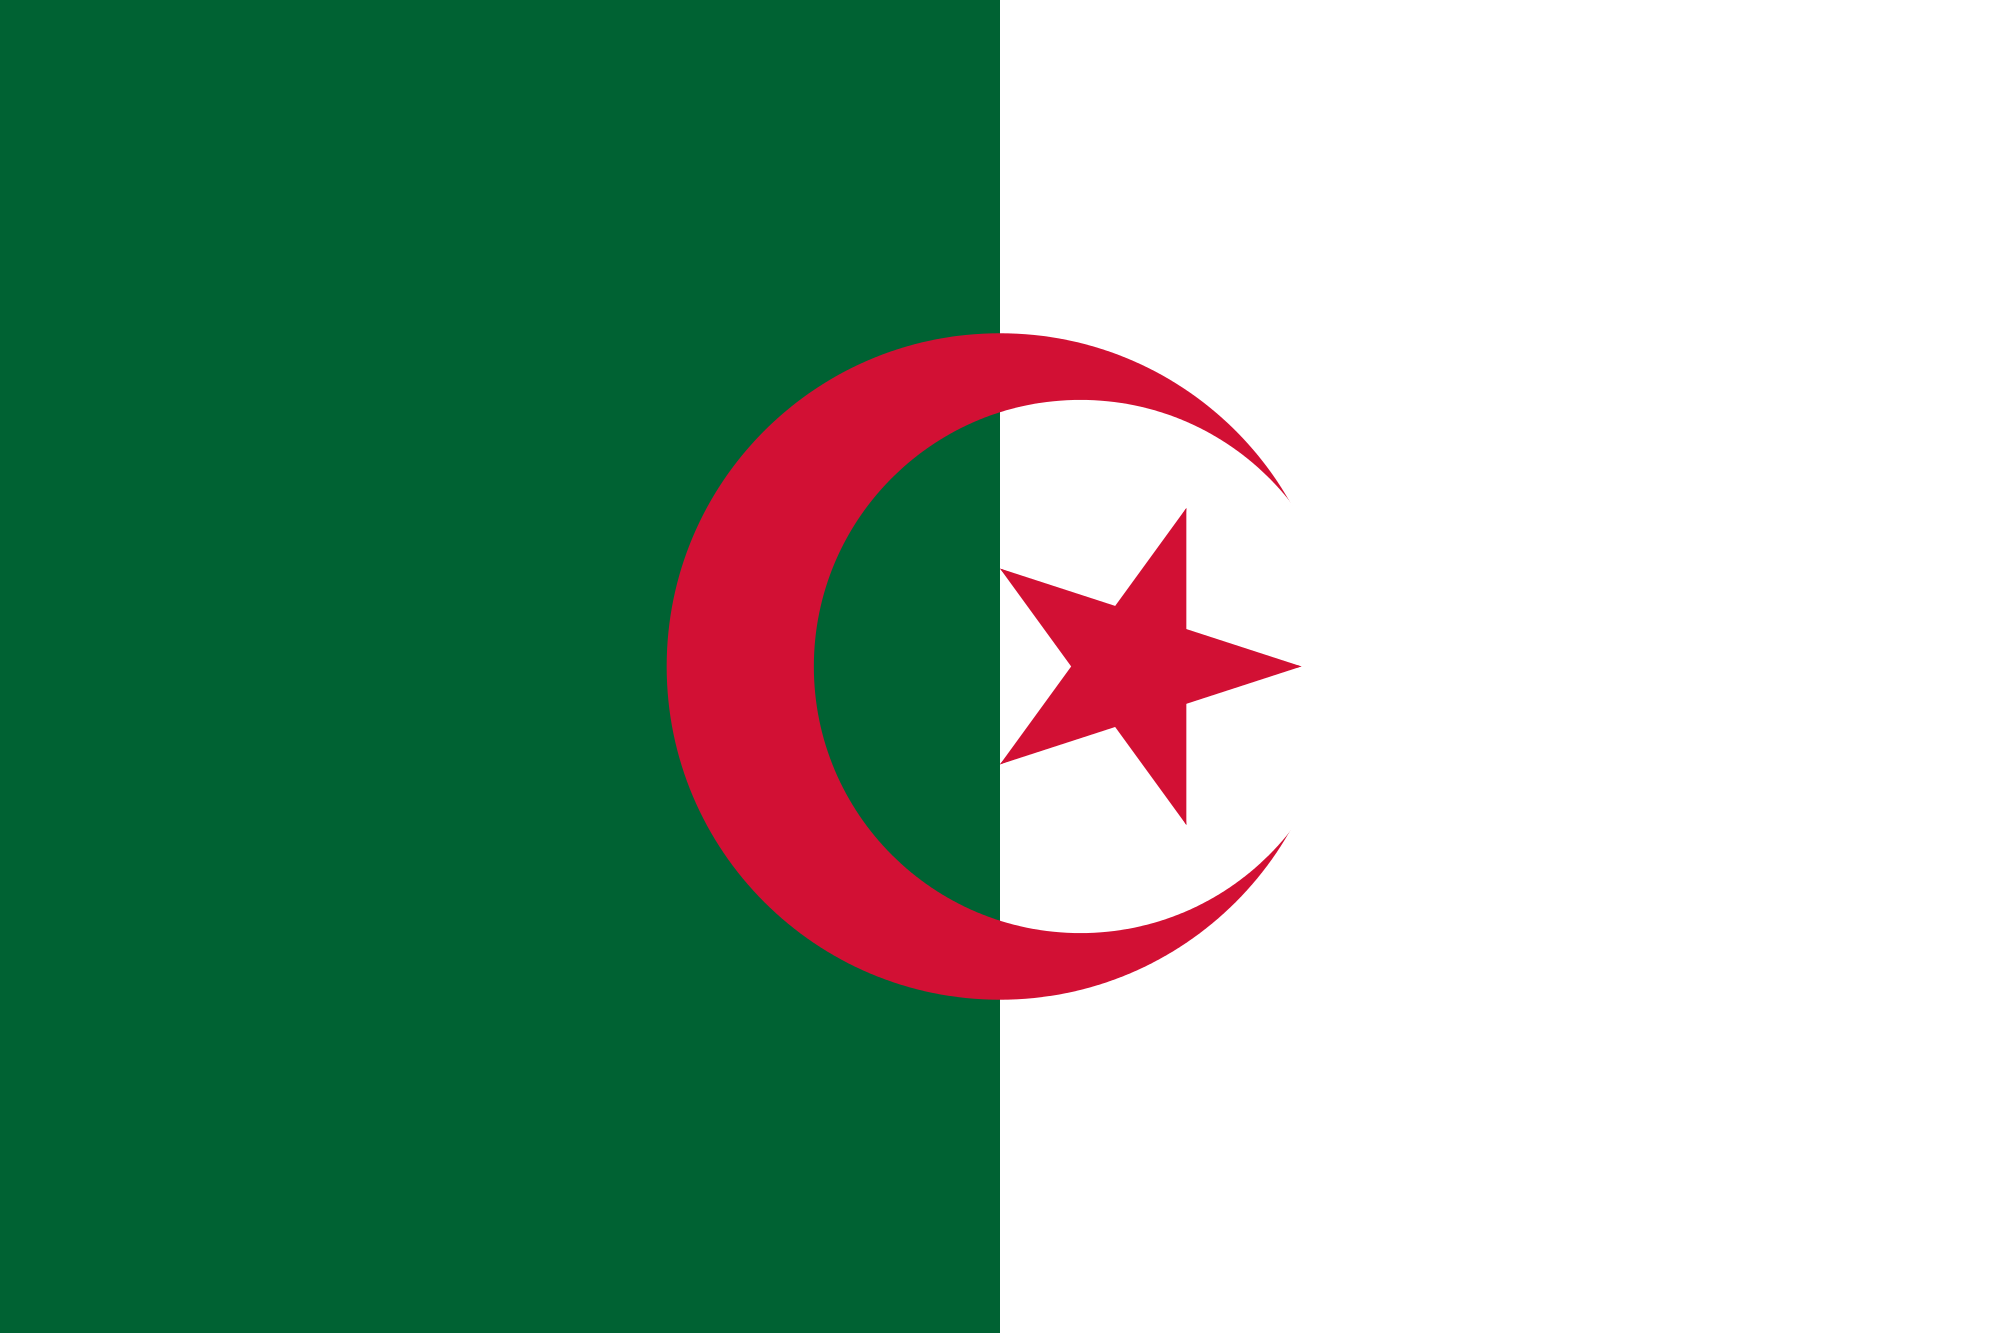 https://upload.wikimedia.org/wikipedia/commons/thumb/7/77/Flag_of_Algeria.svg/2000px-Flag_of_Algeria.svg.png